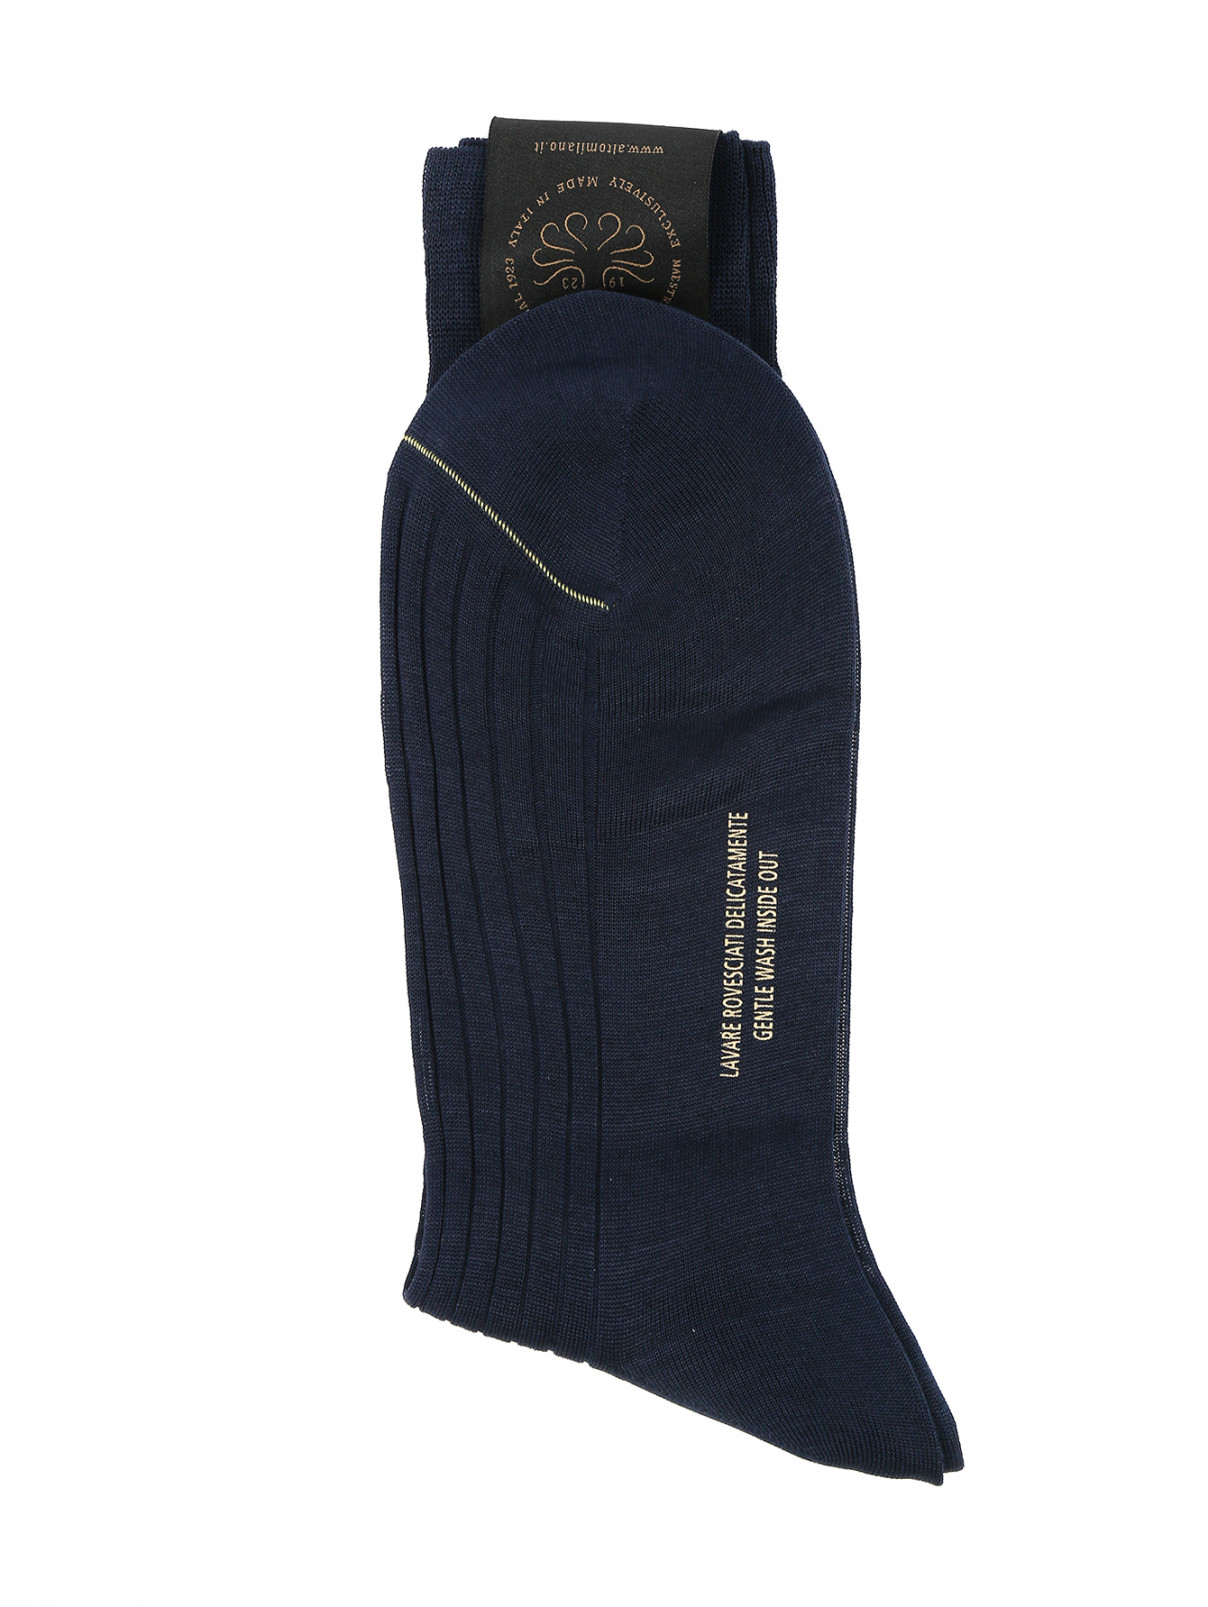 Носки из хлопка Peekaboo  –  Общий вид  – Цвет:  Синий